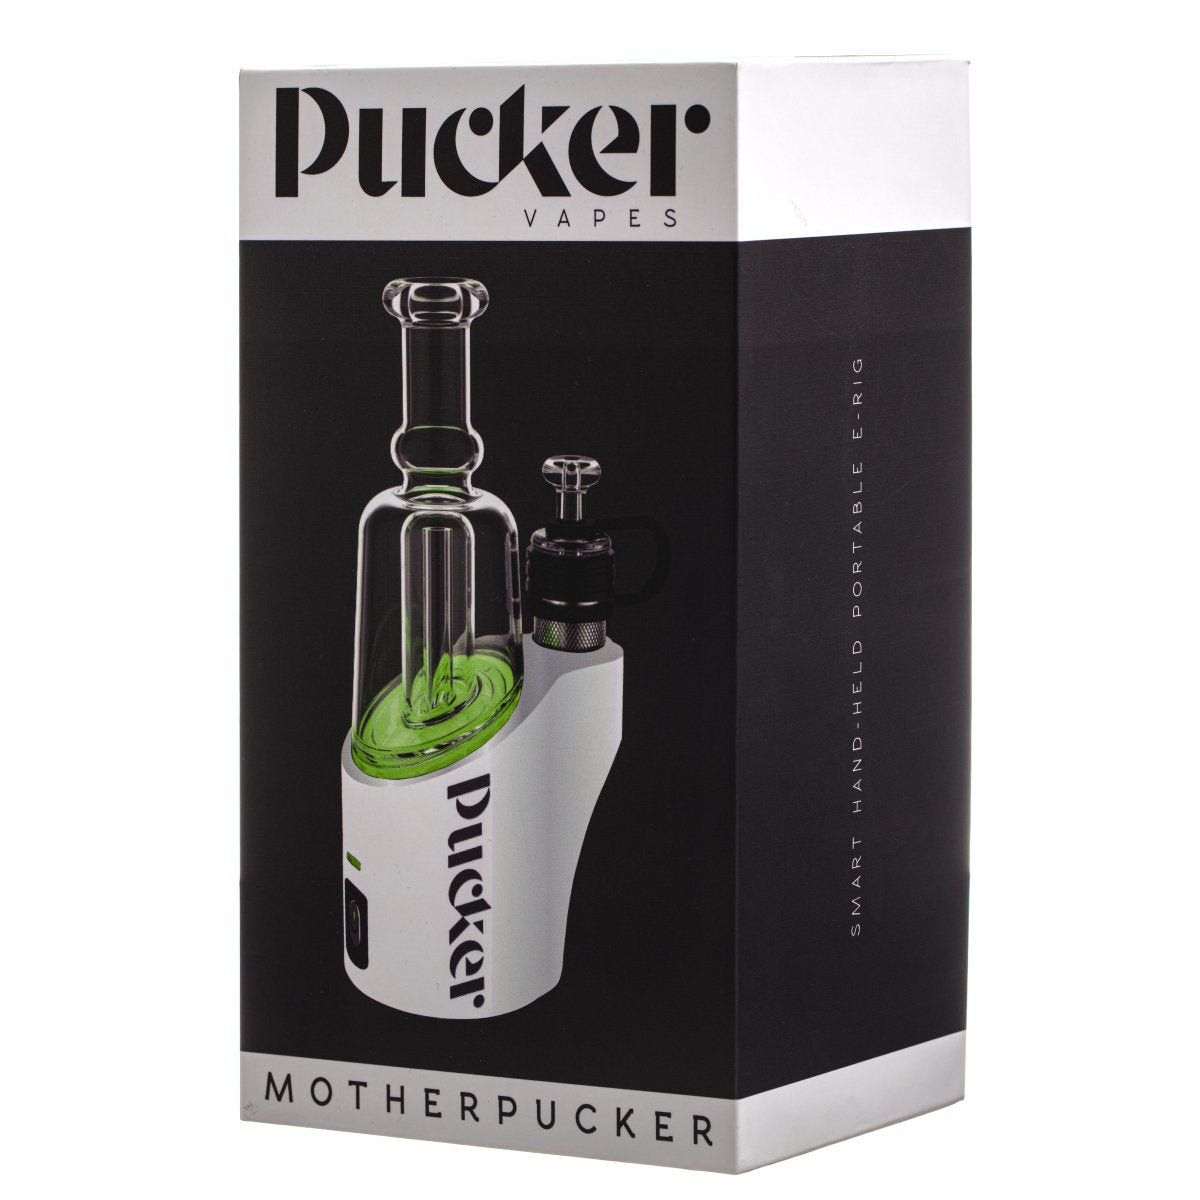 PUCKER "Mother" Smoking Vaporizer - (1 Count)-Vaporizers, E-Cigs, and Batteries